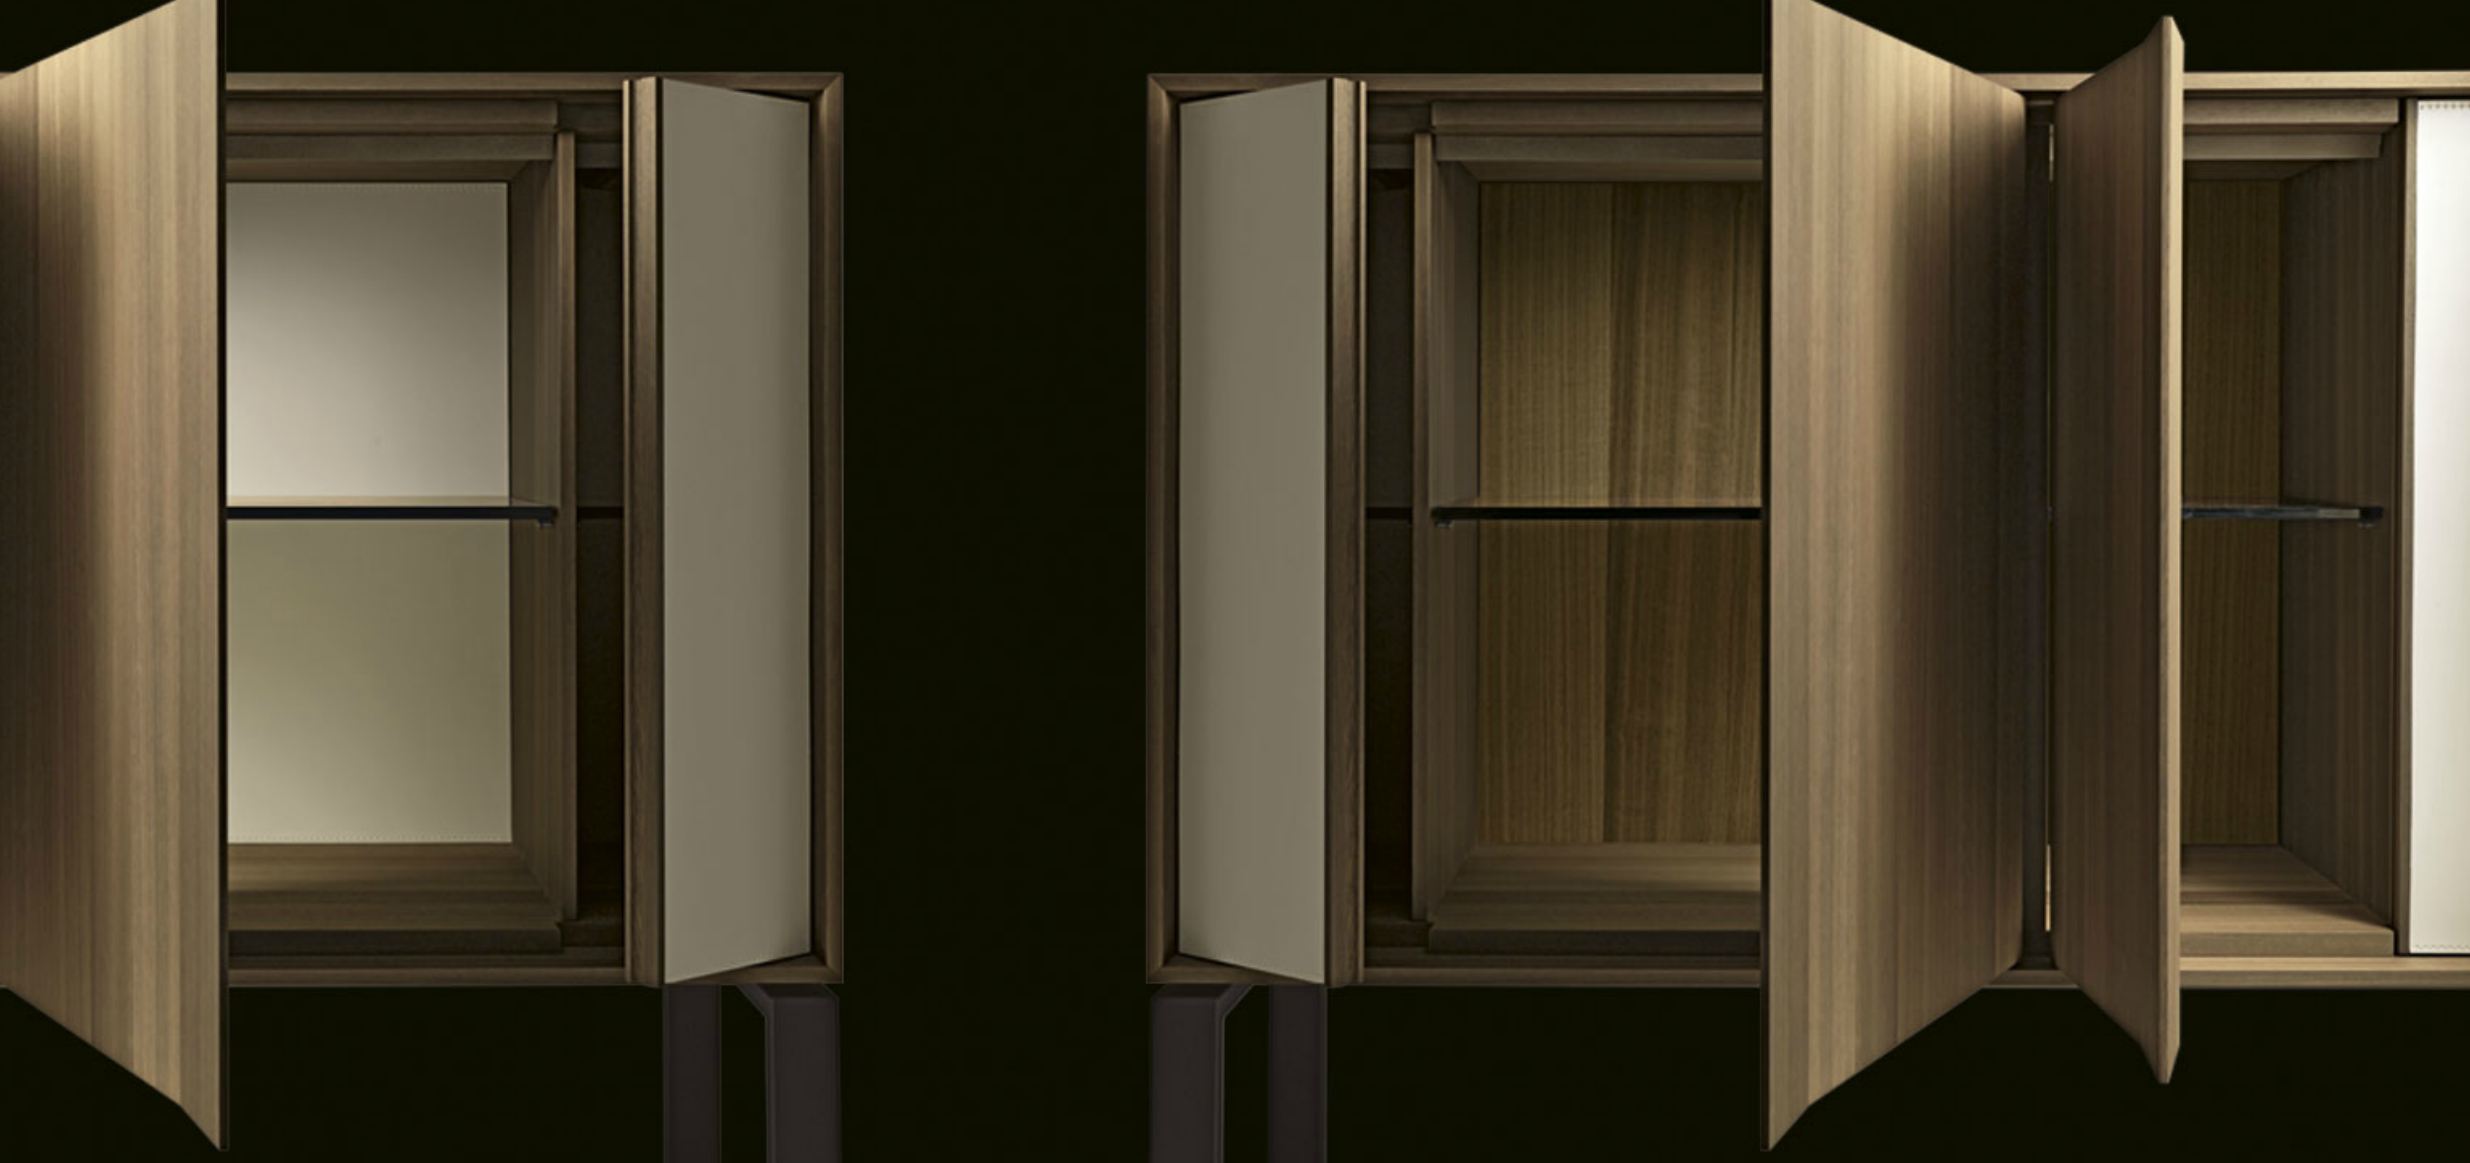 Барный шкаф в современной стиле Origami by Giorgetti